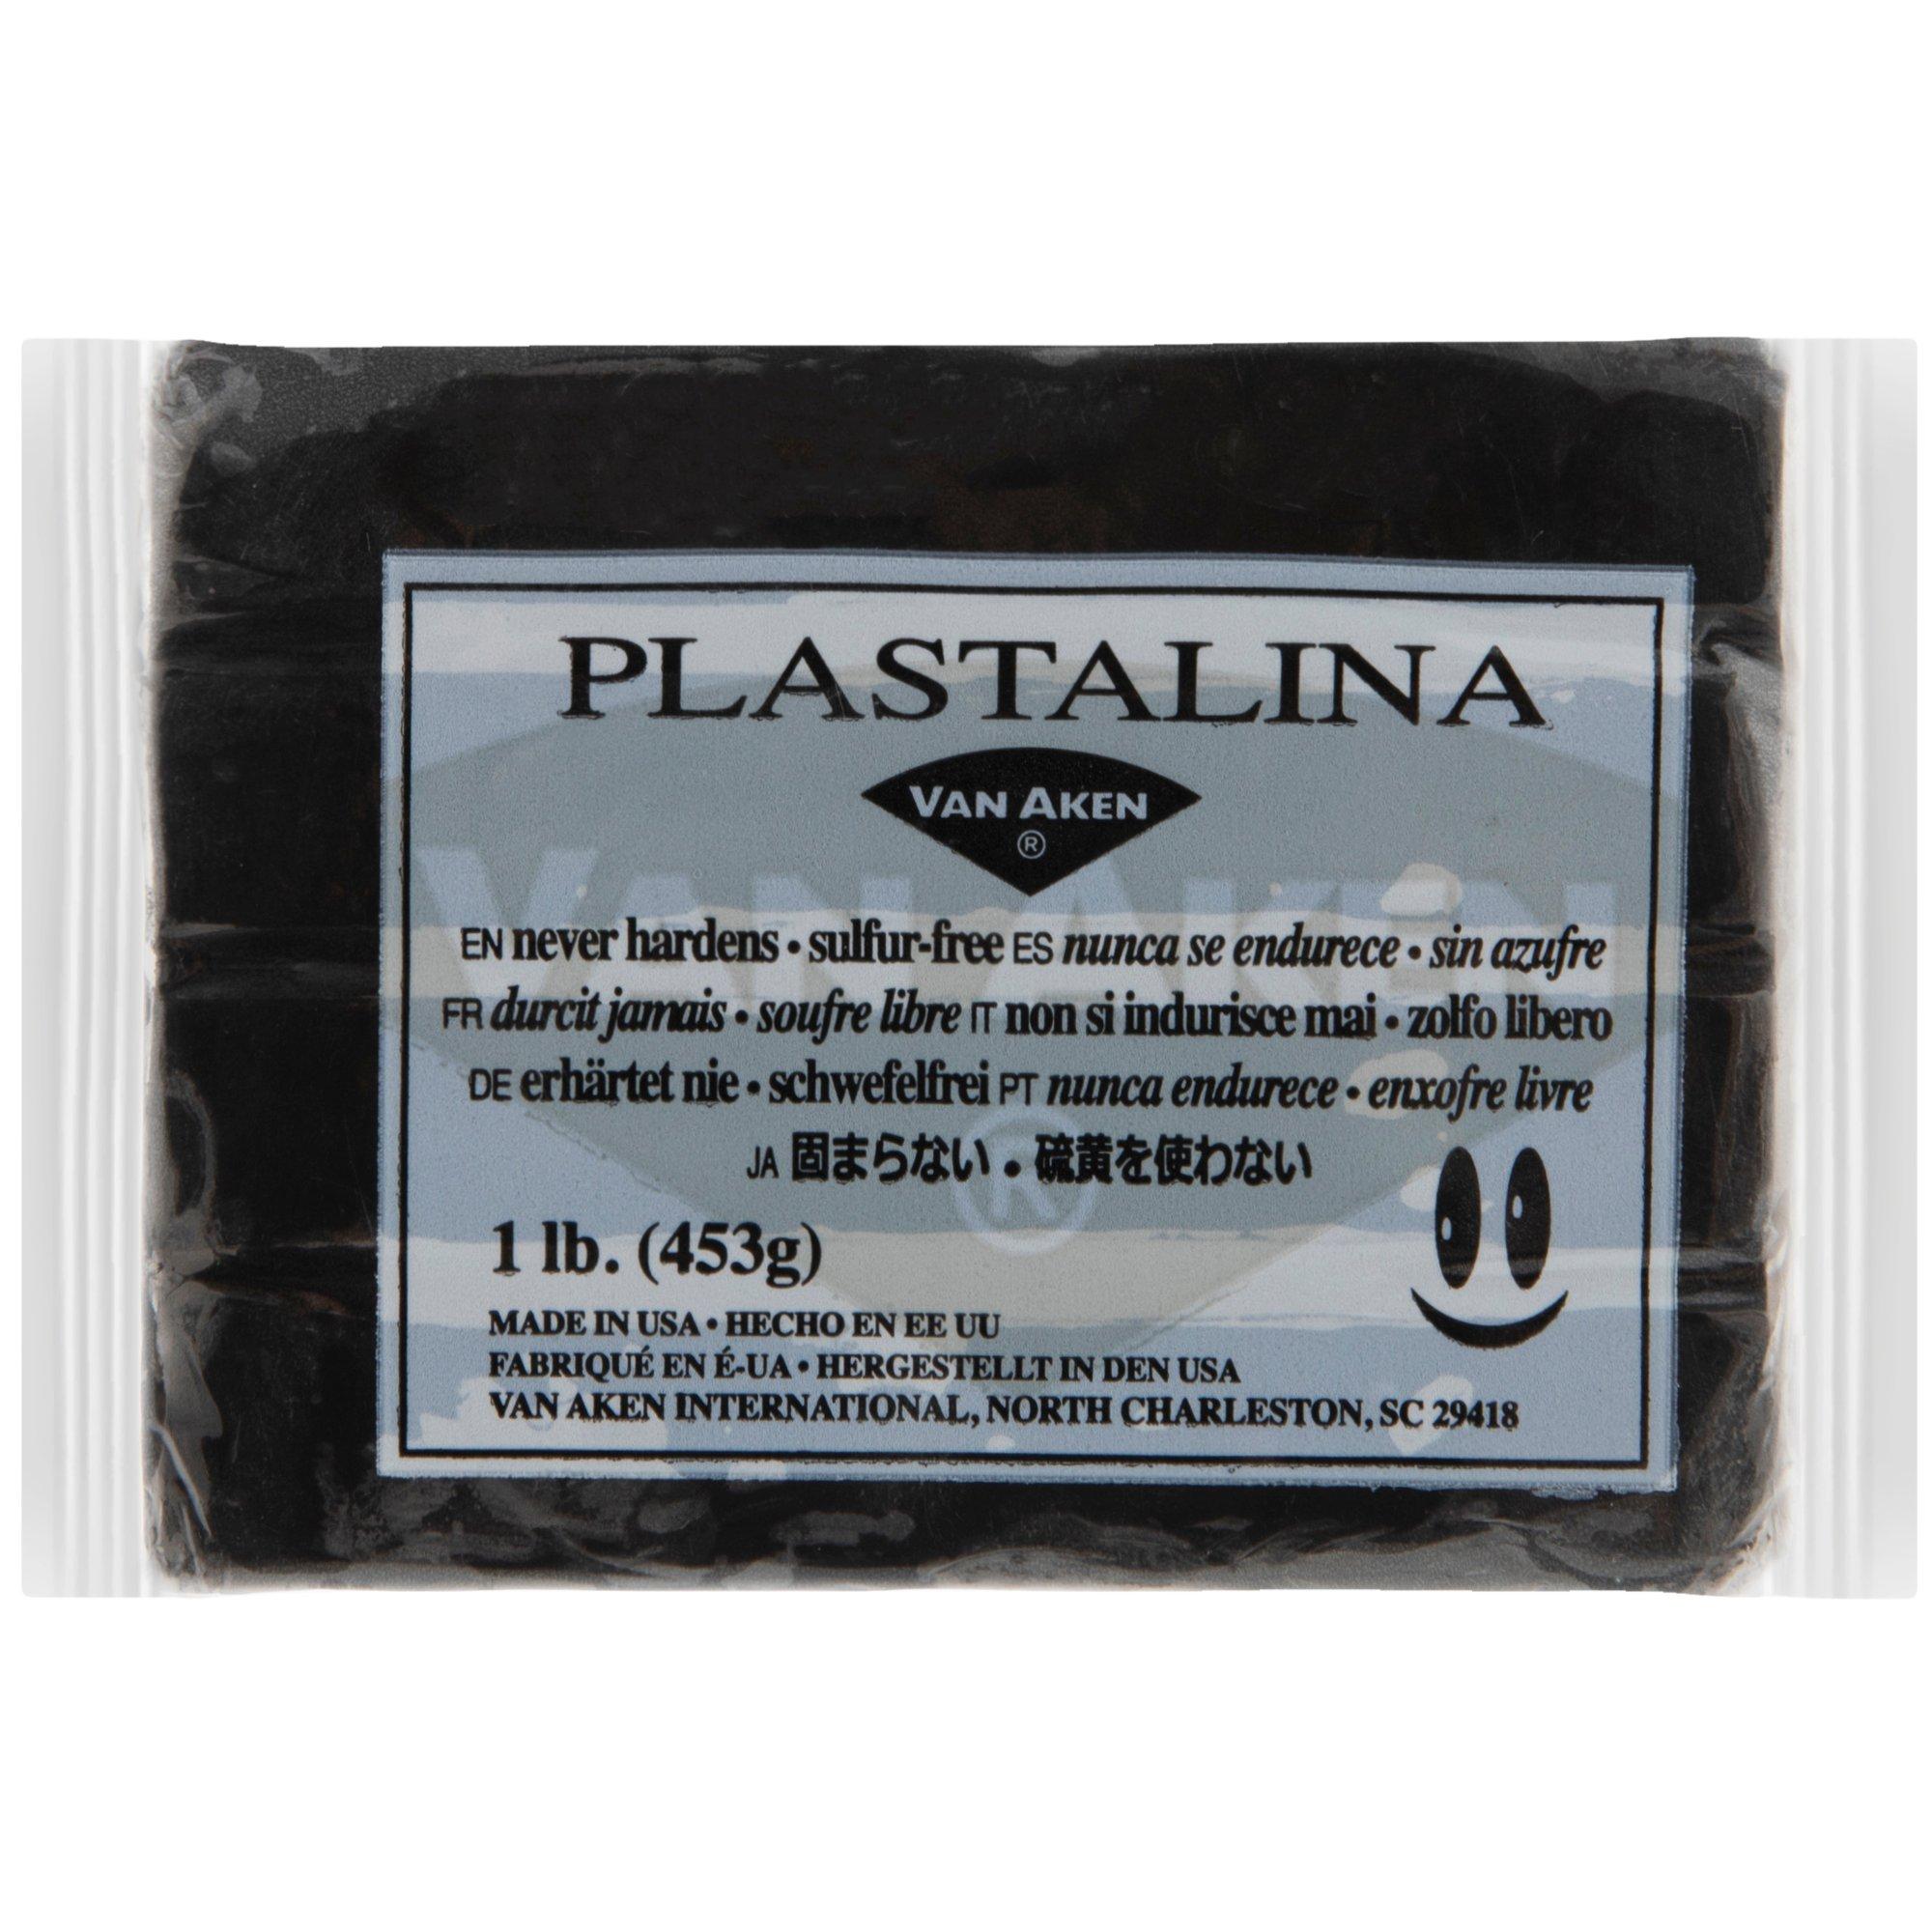 Plastiline, High-Precision Modelling Clay